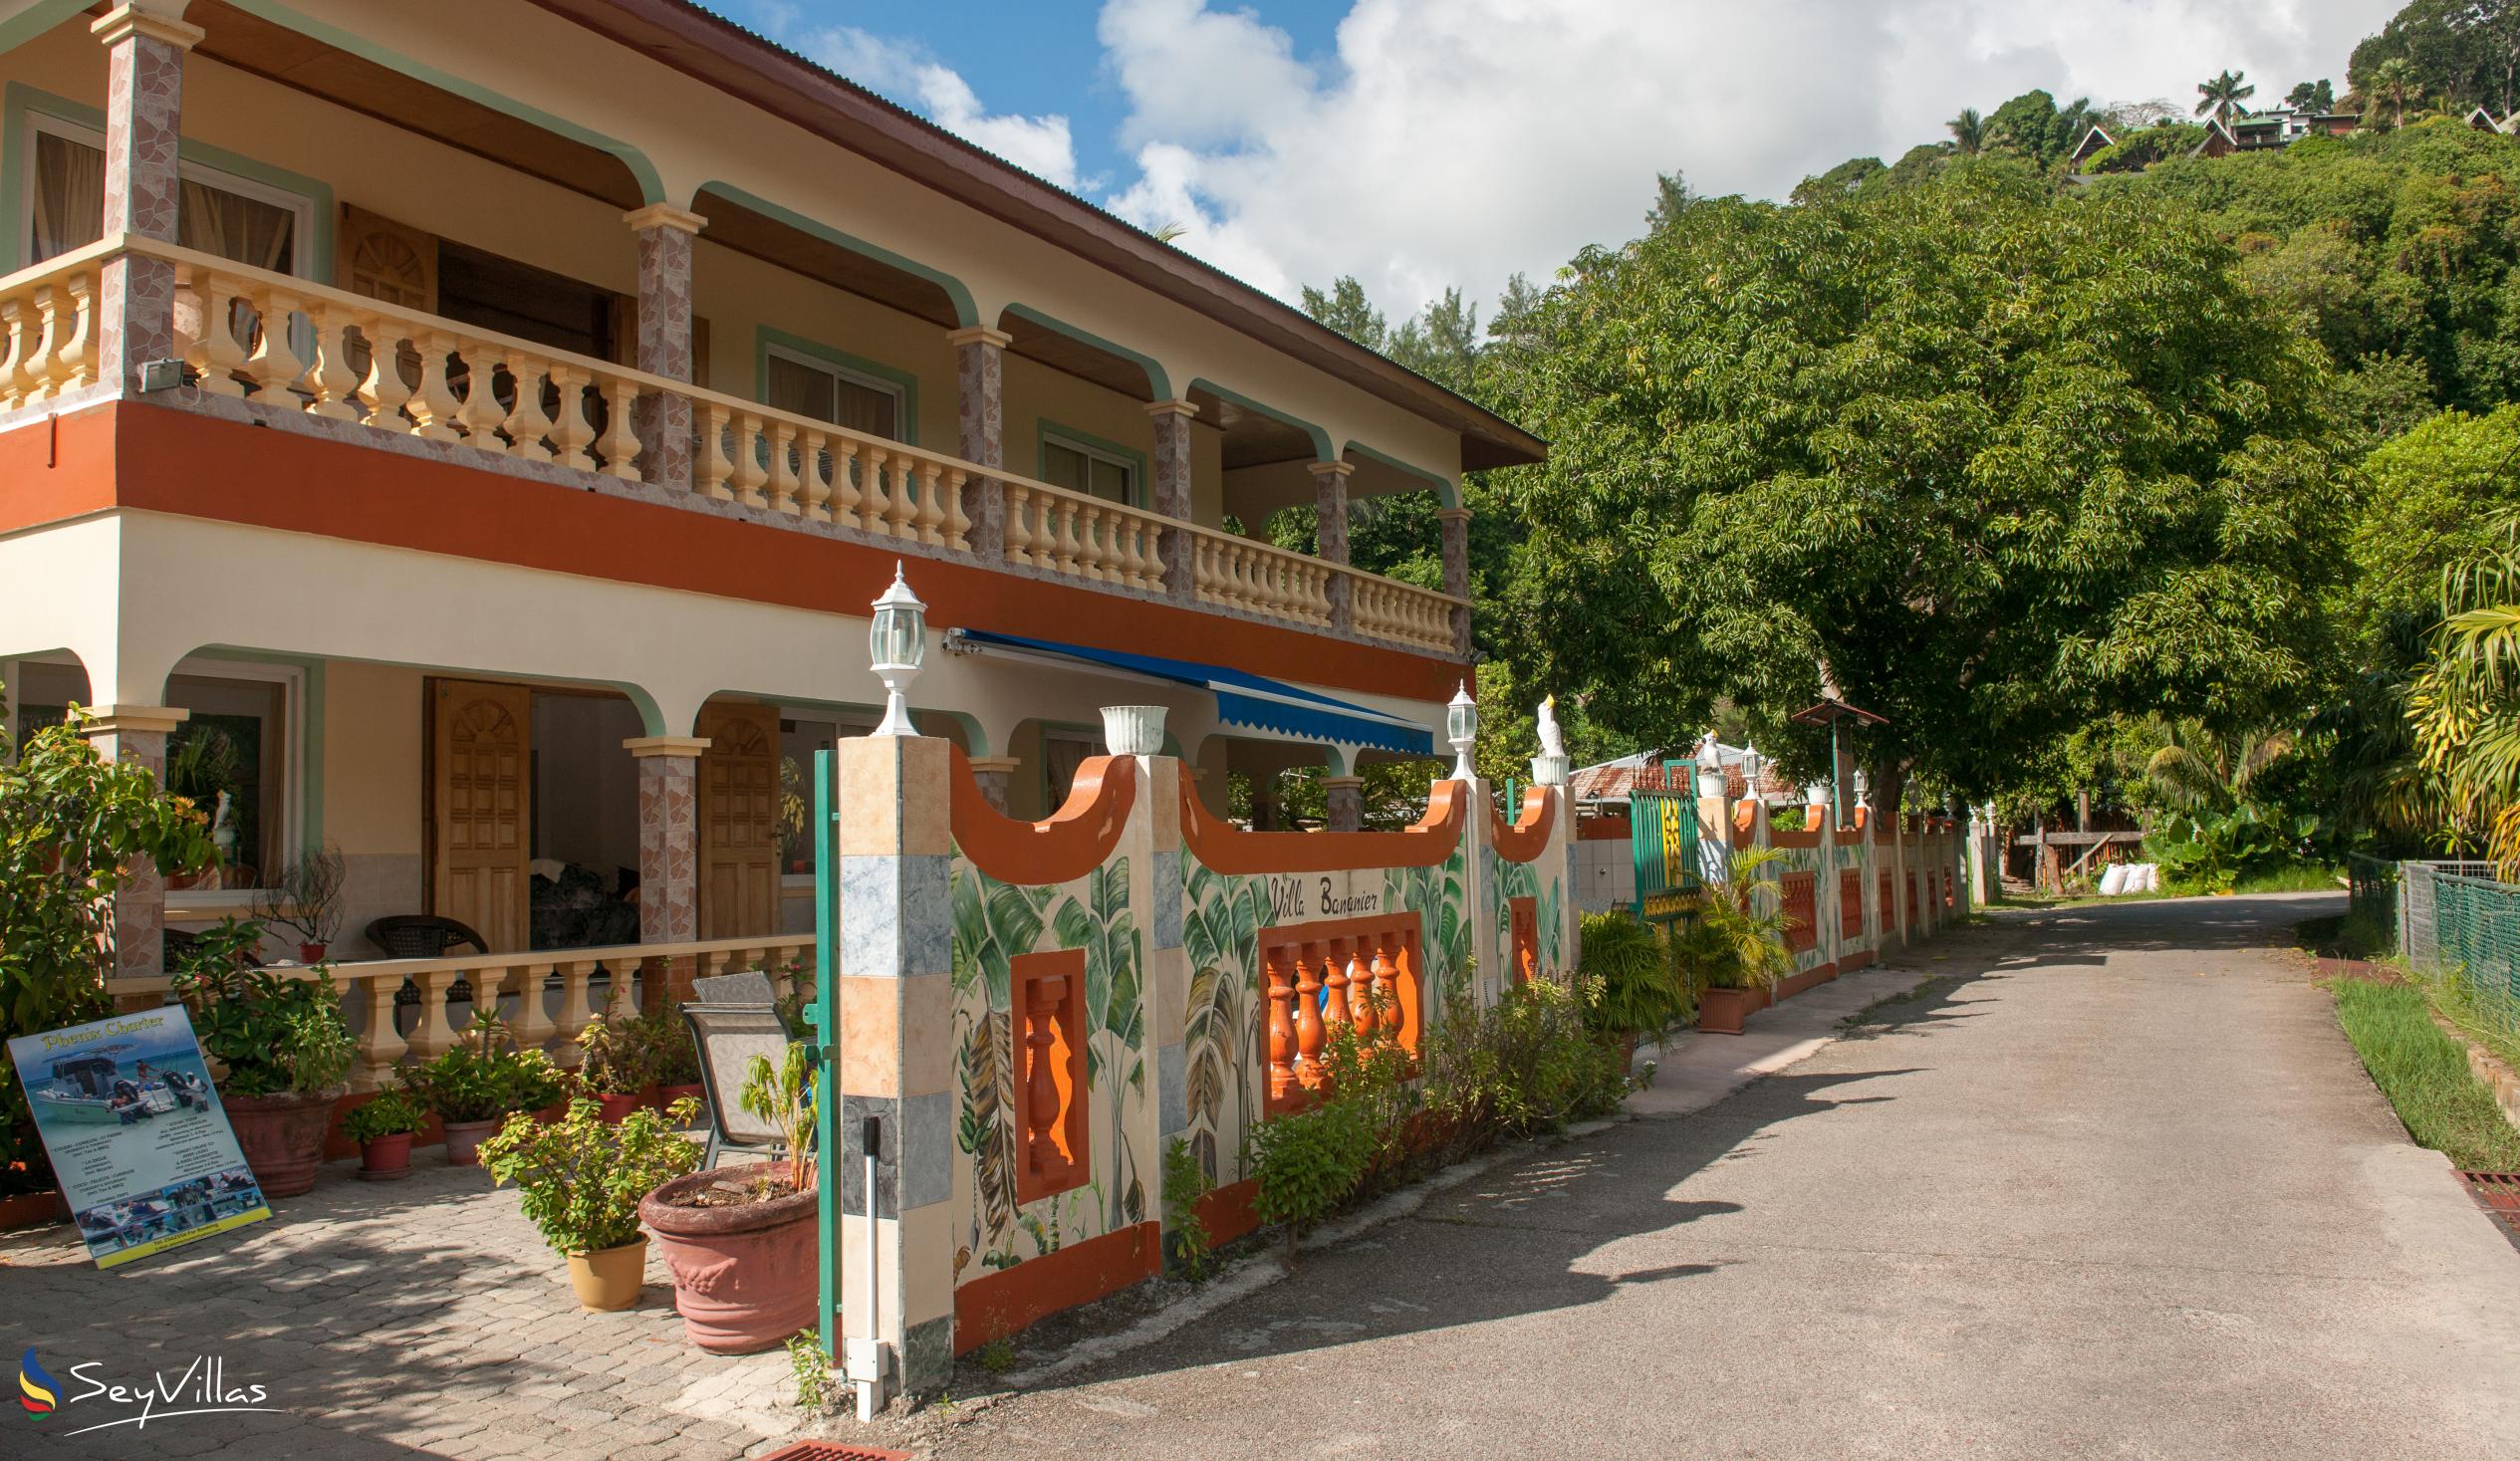 Foto 2: Villa Bananier - Posizione - Praslin (Seychelles)